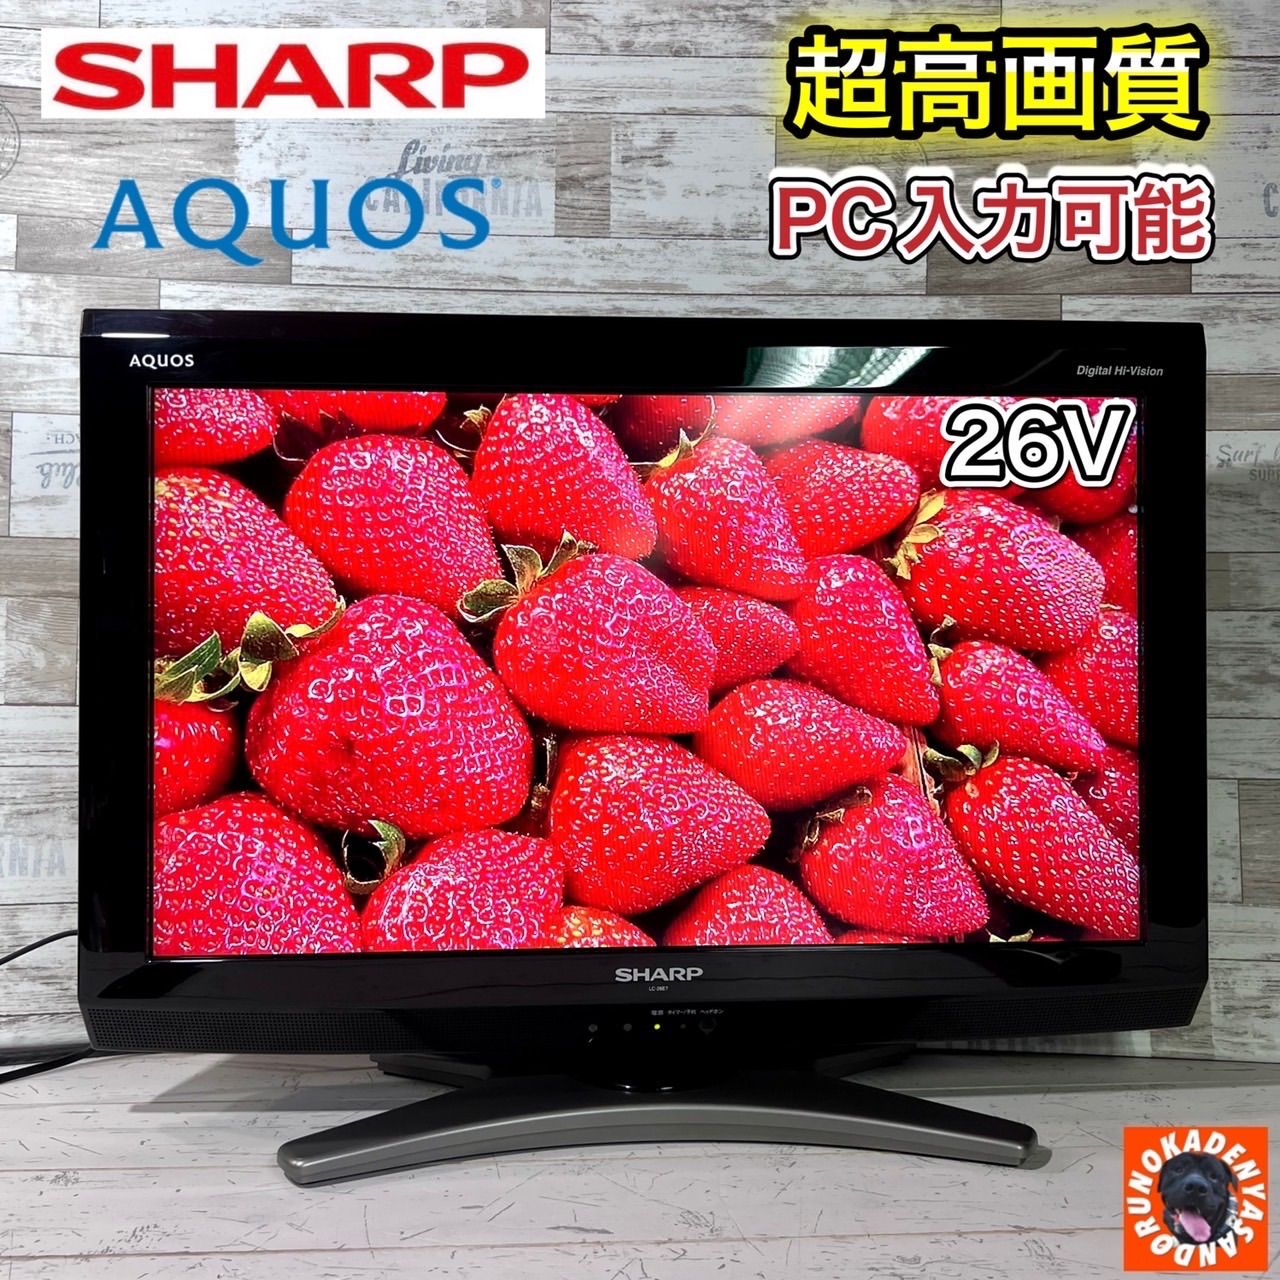 SHARP AQUOS 液晶テレビ 26型